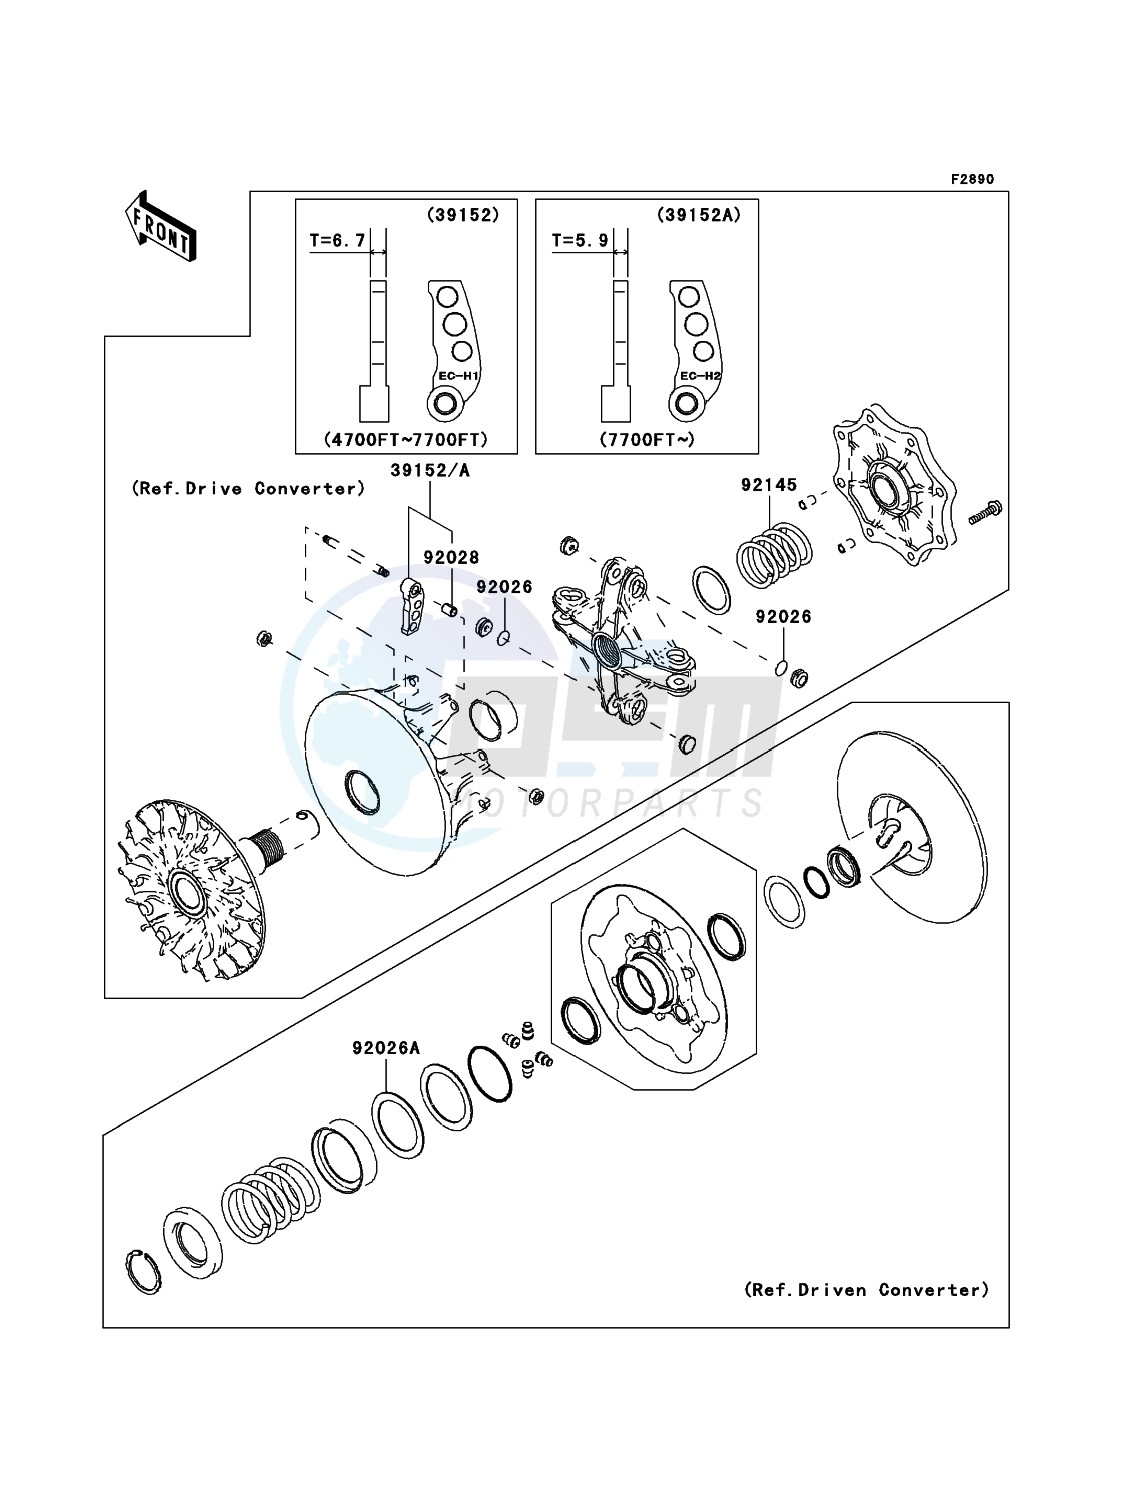 Optional Parts(Converter) blueprint